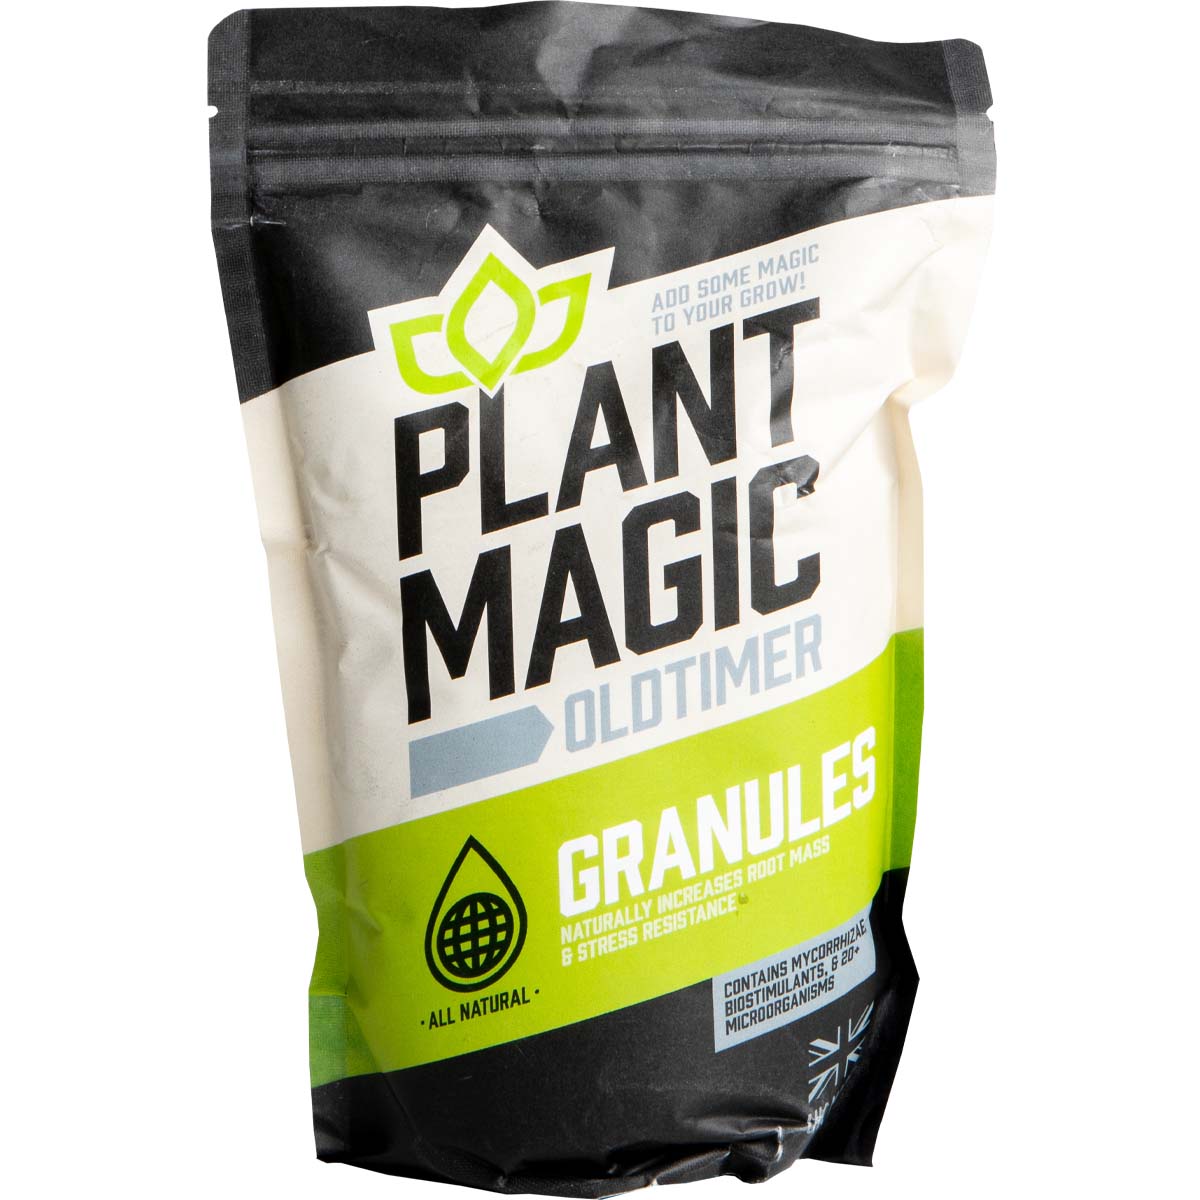 Plant Magic - Oldtimer Granules